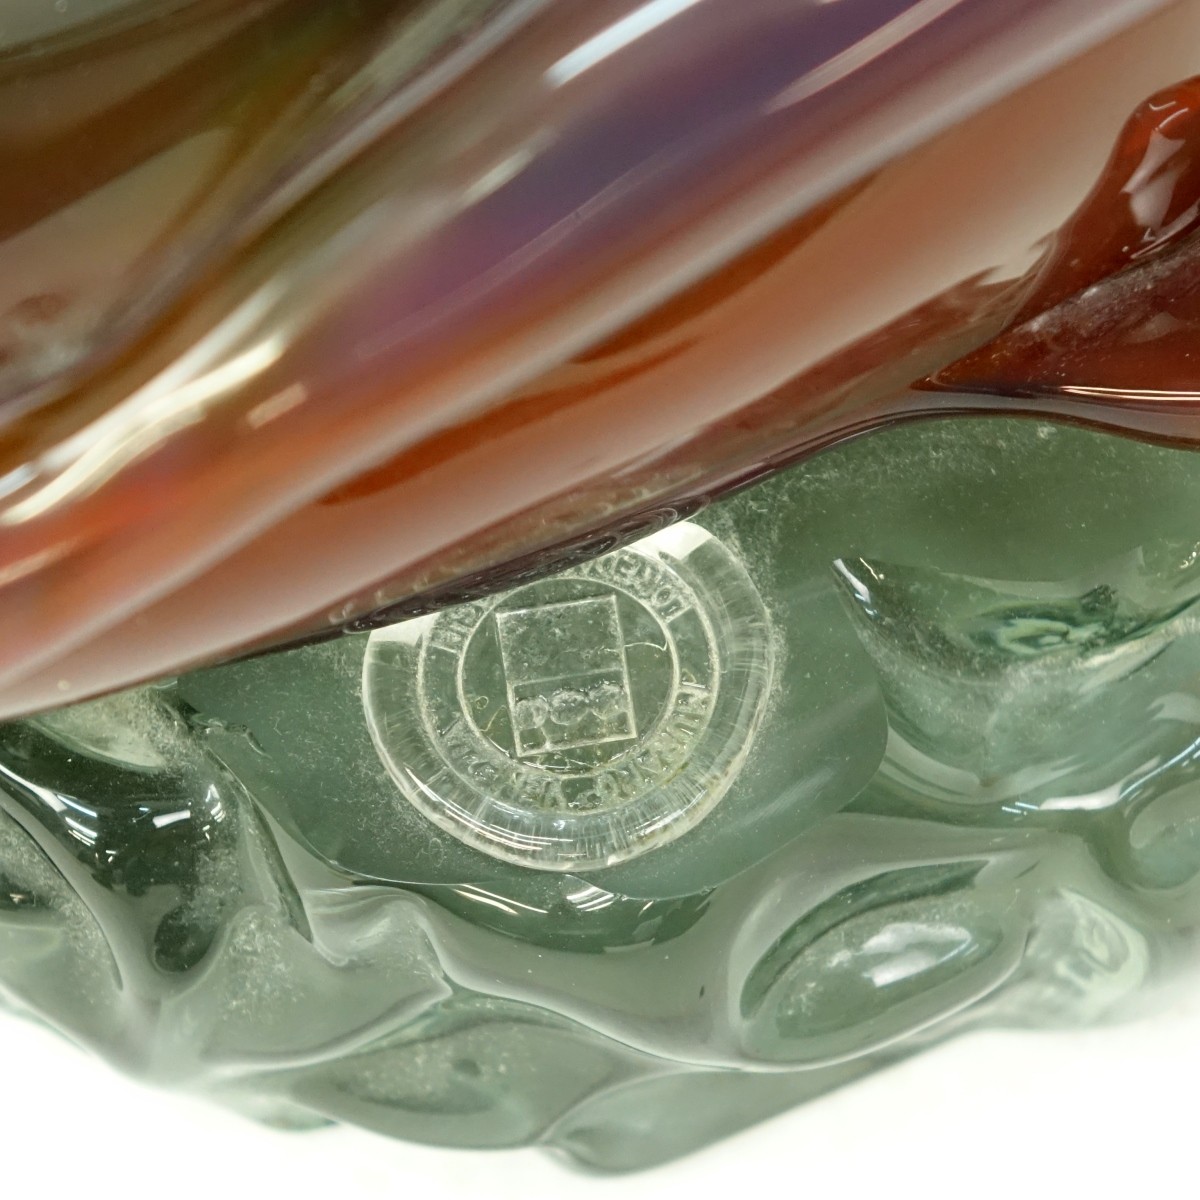 Loredano Rosin Glass Sculpture